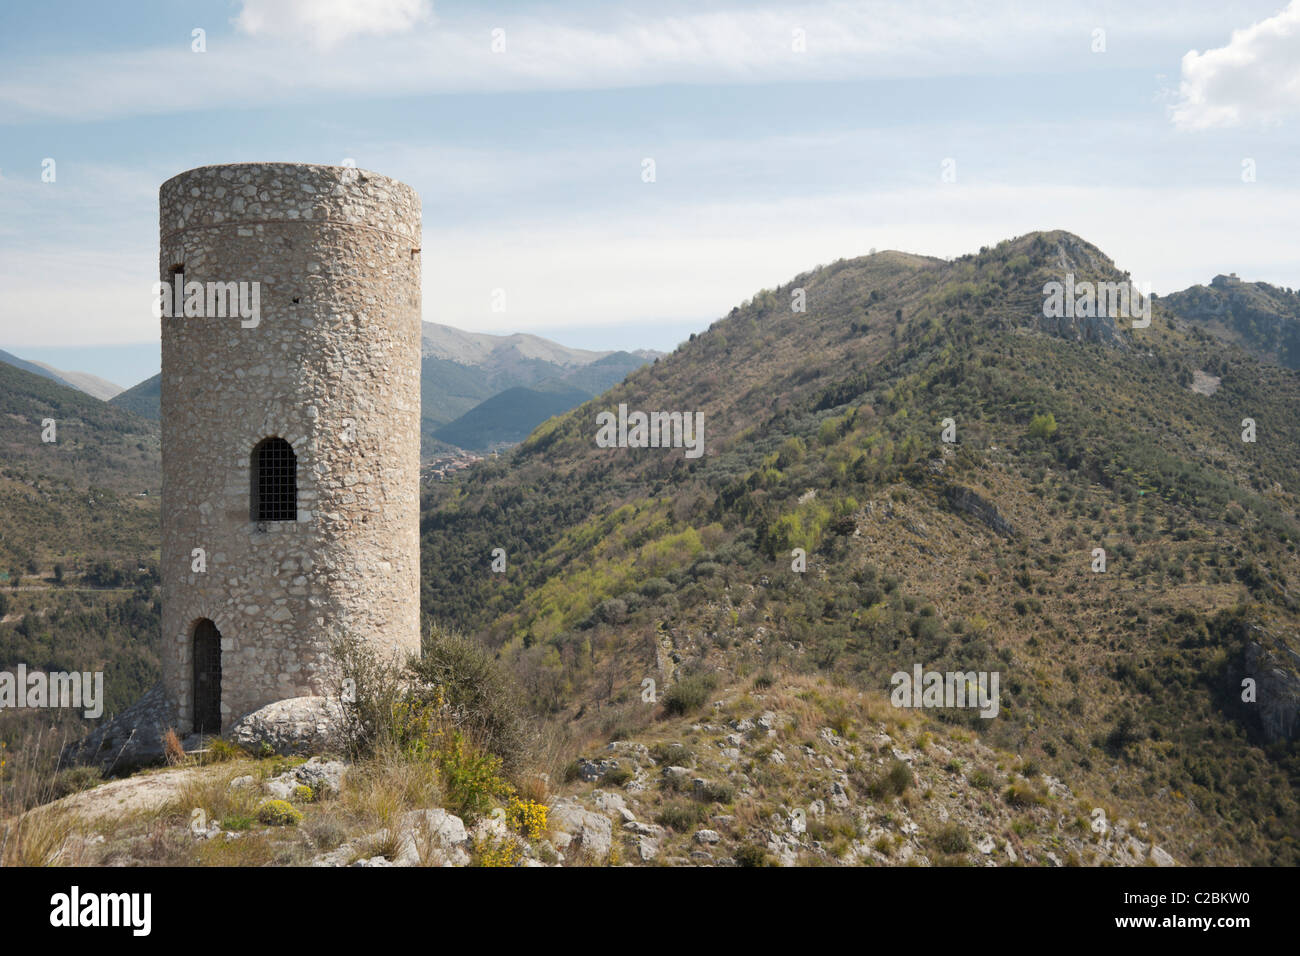 St Thomas Aquinas (Tommaso d'Aquino) restored tower, part of family castle ruins in Roccasecca. Stock Photo